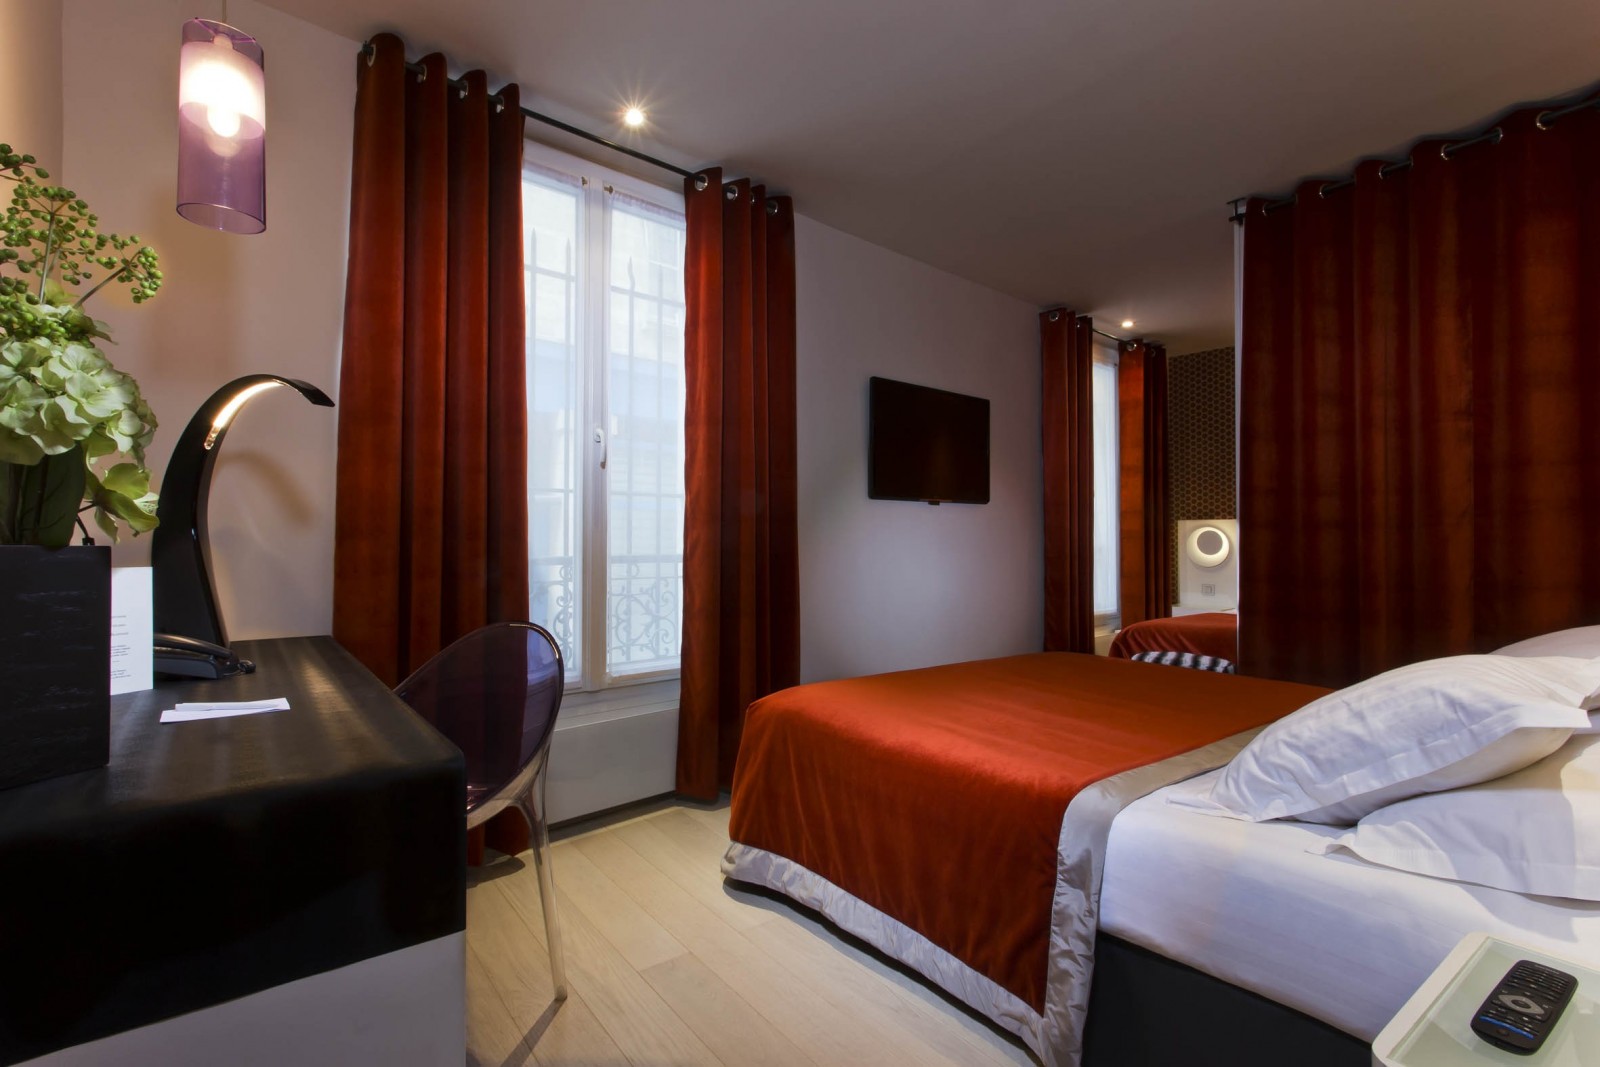 Hotel WYLD Saint Germain Paris *** | Hotel Pantheon Paris | Photo Gallery